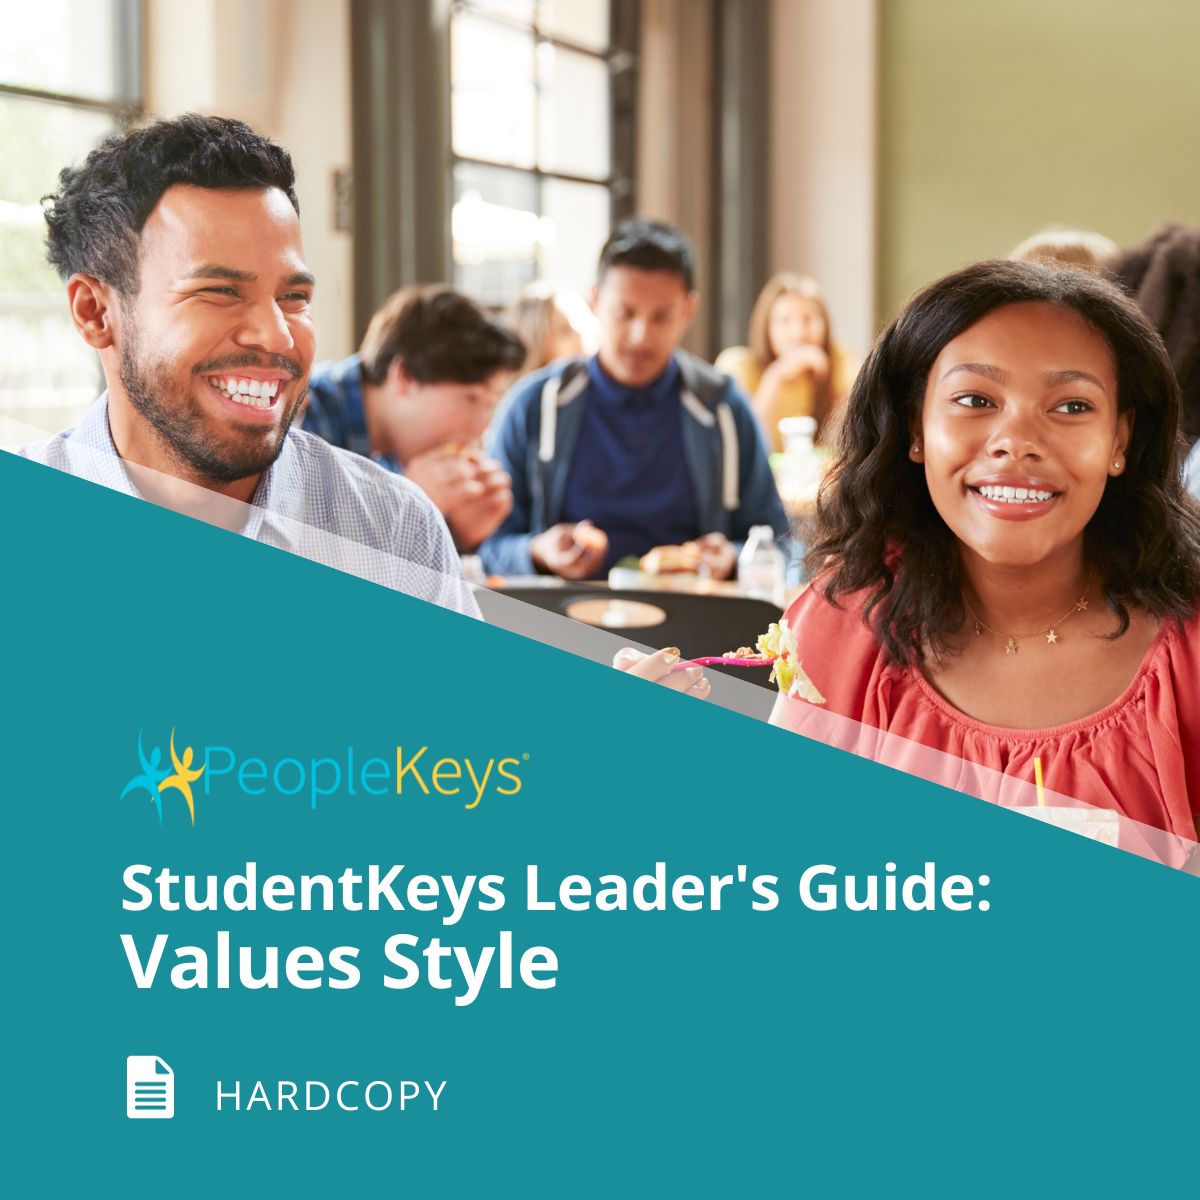 StudentKeys Leader's Guide: Values Style (Hardcopy)